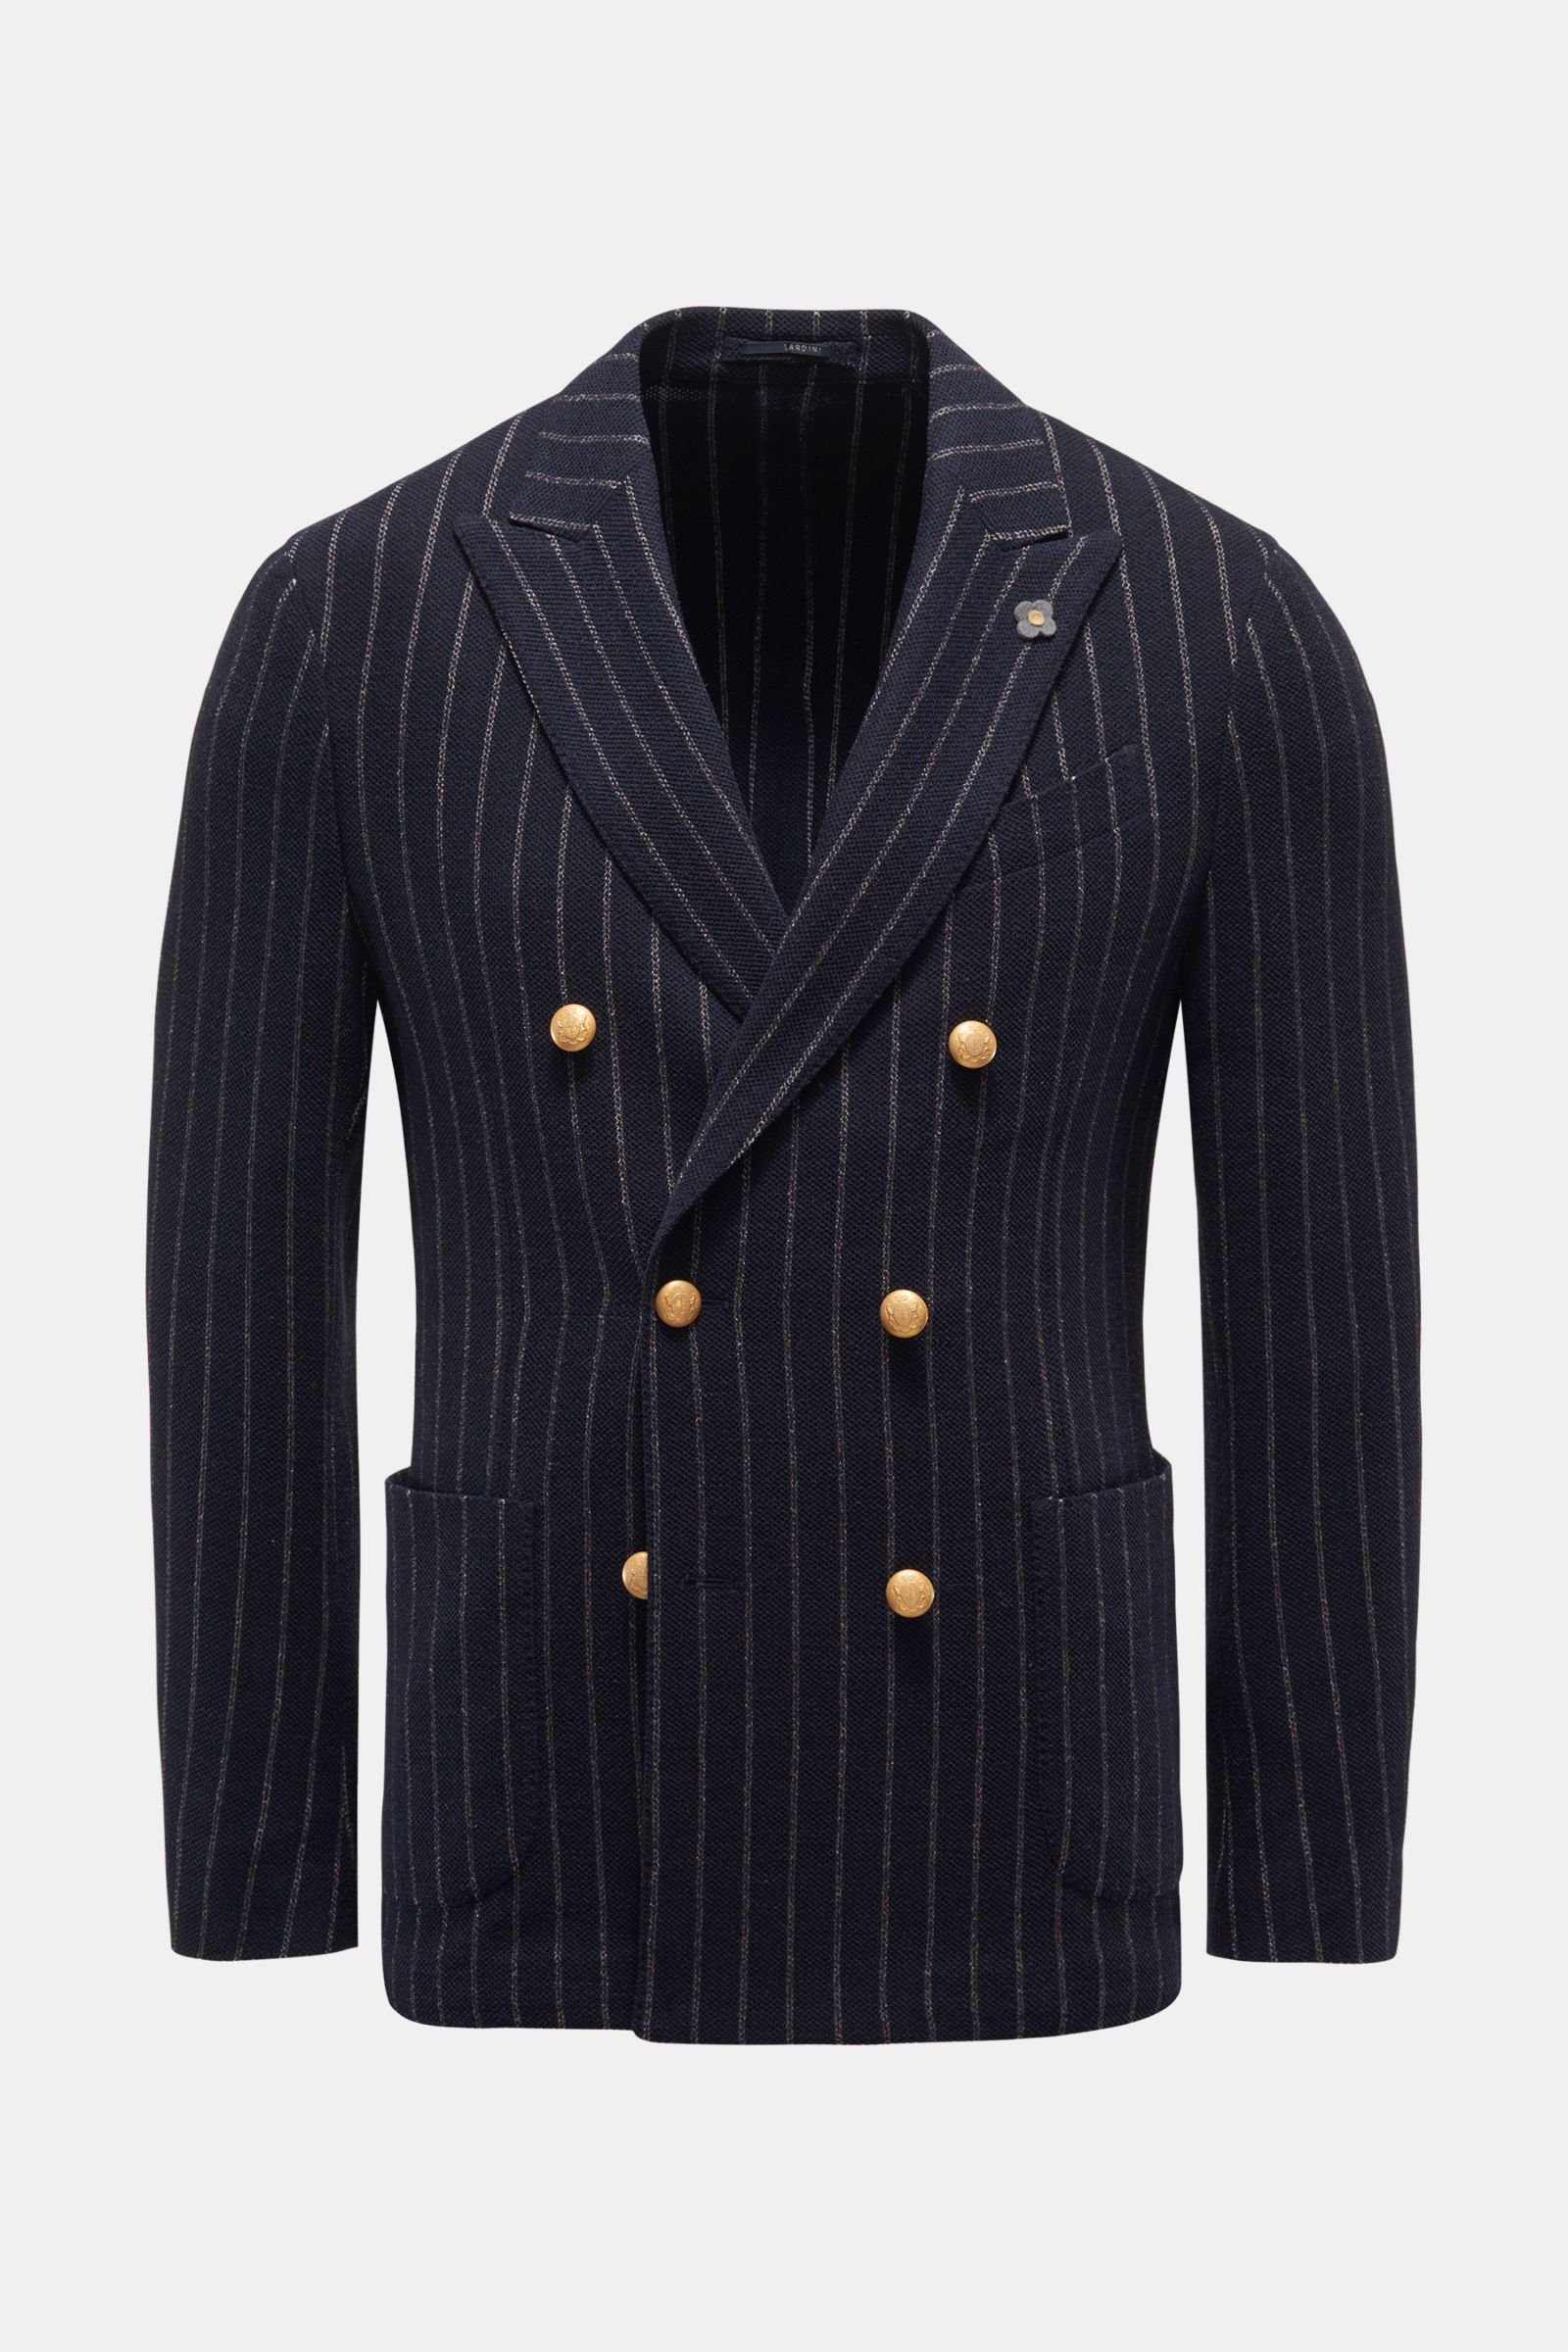 Knit blazer navy/beige striped